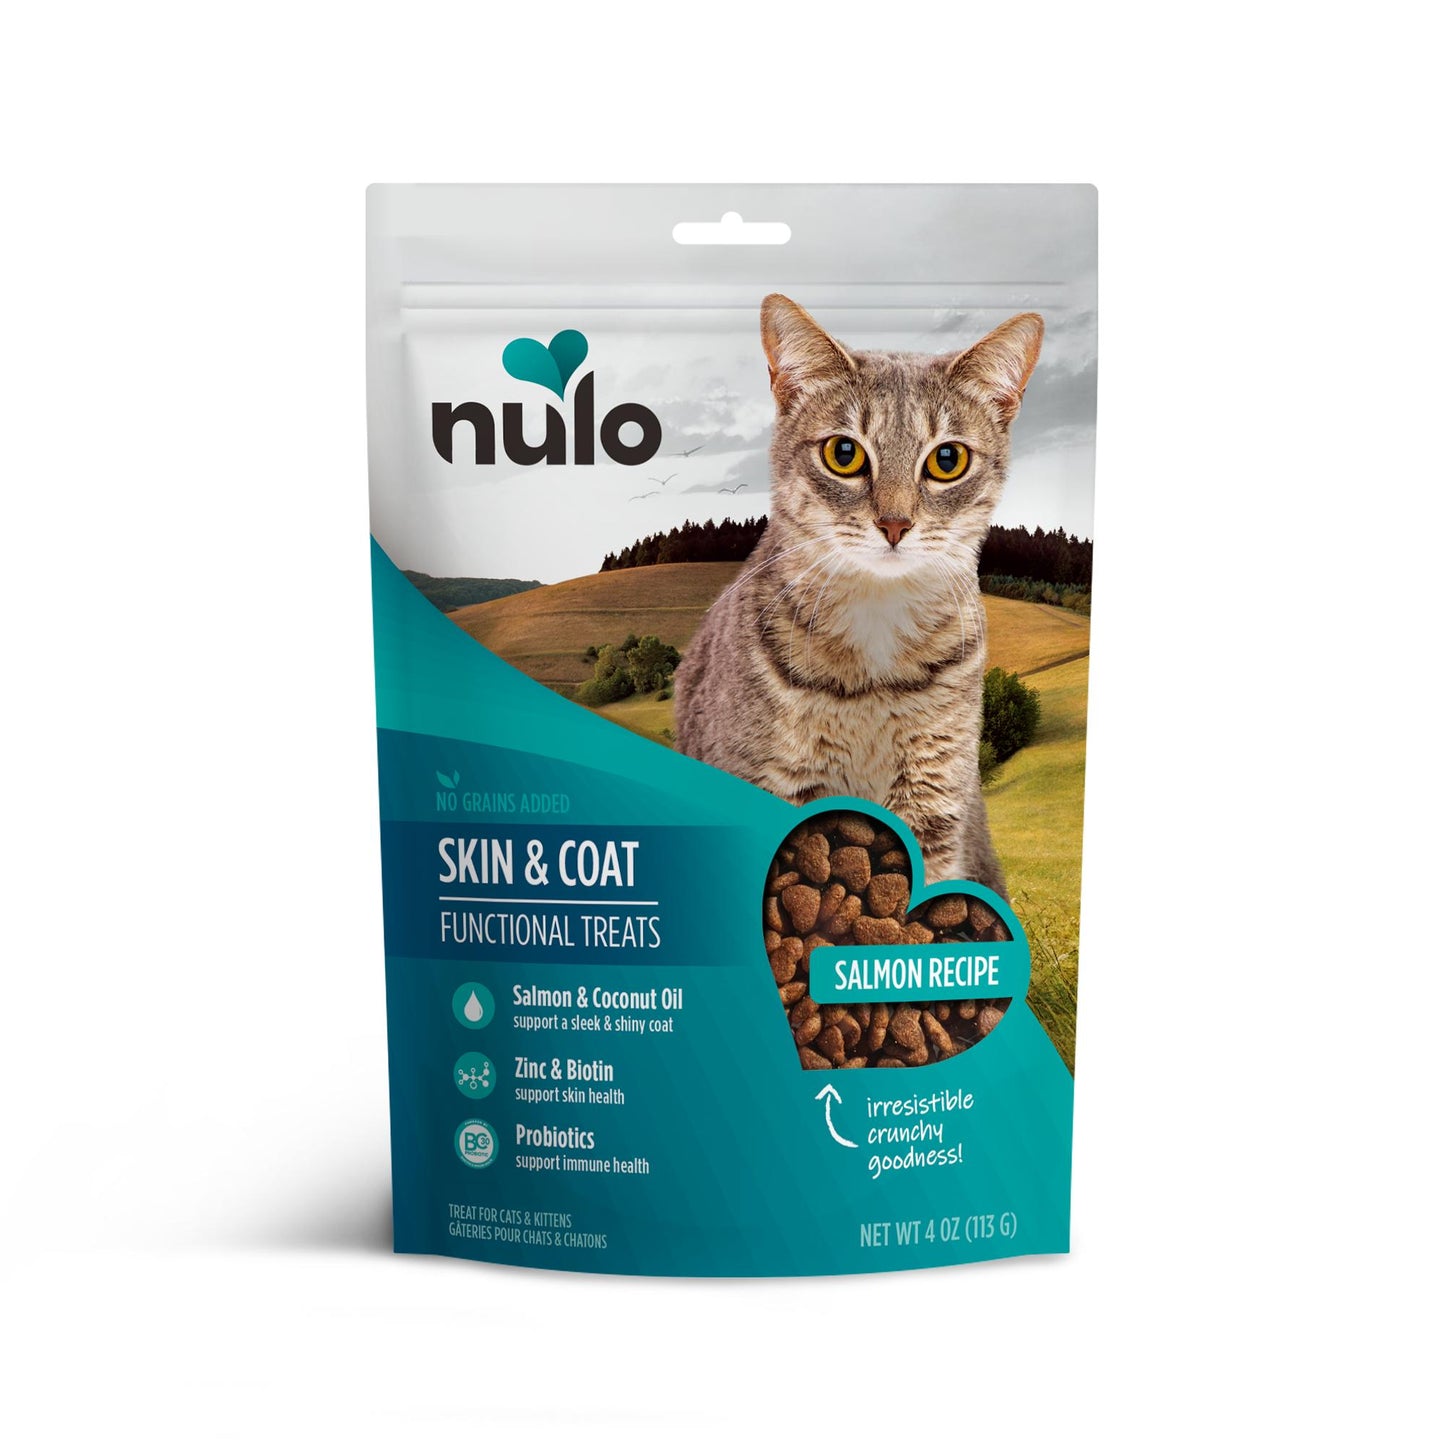 Nulo Skin & Coat Salmon Recipe Functional Cat Treats, 4-oz